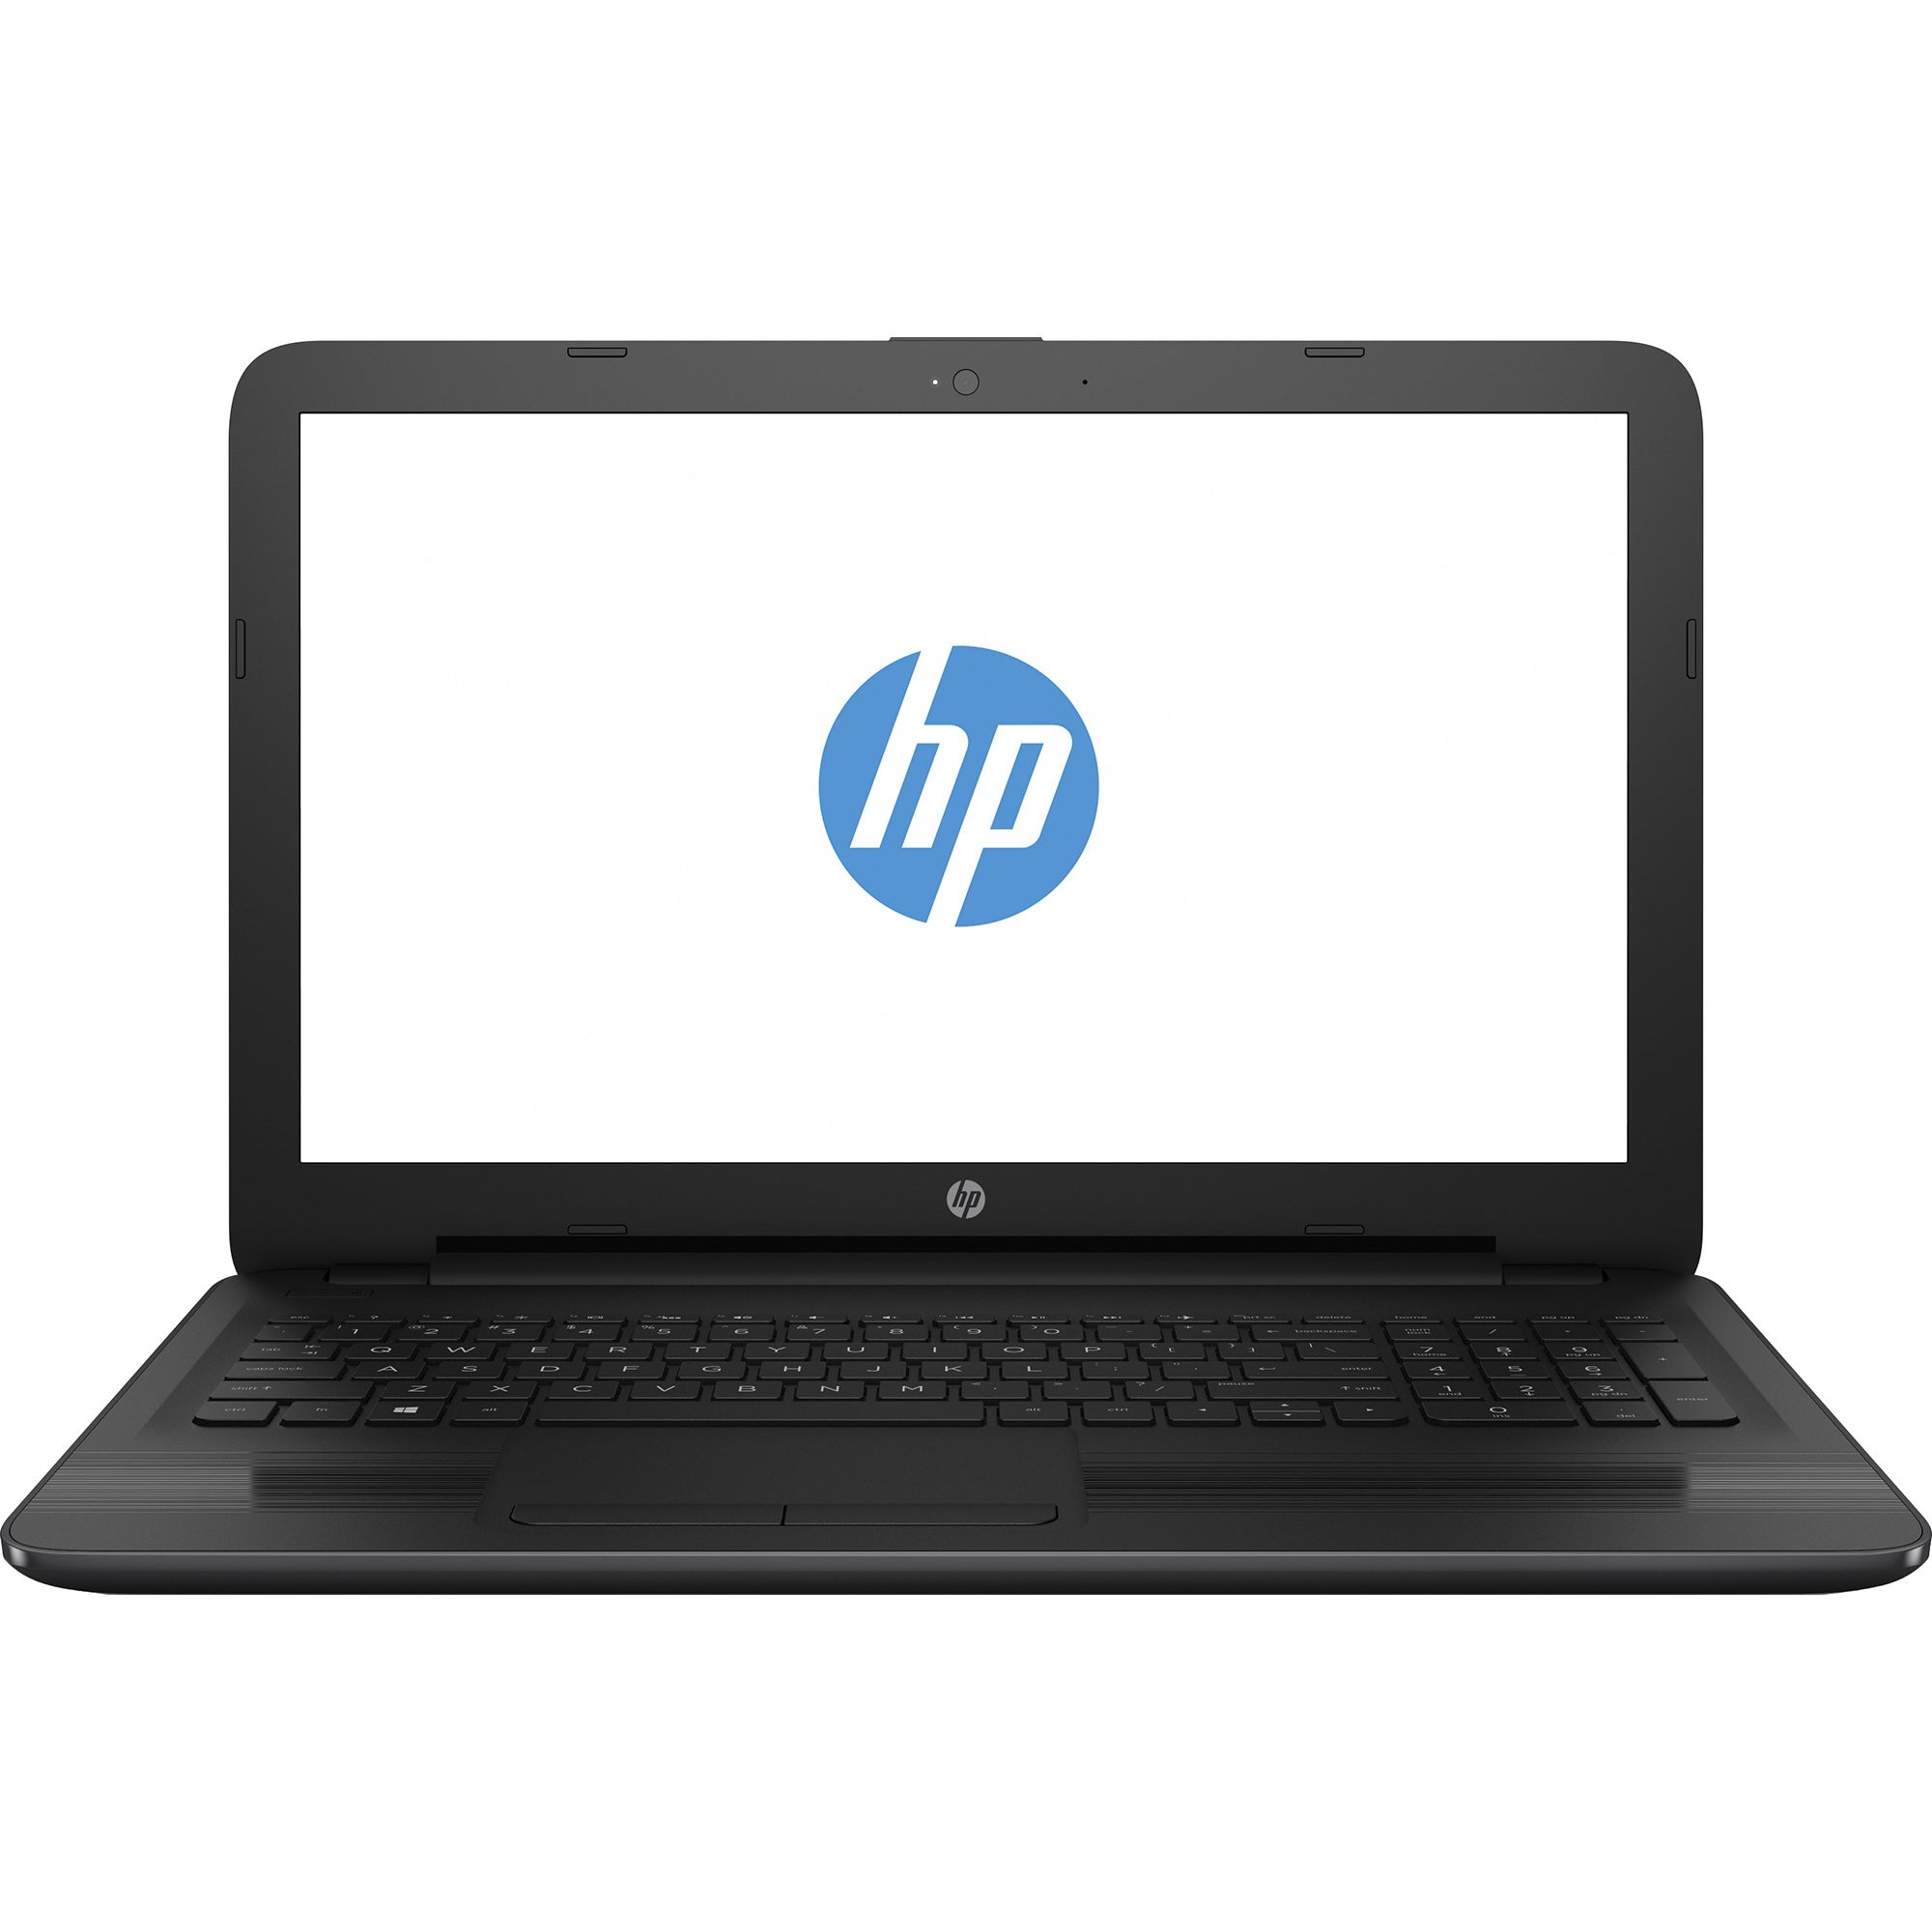 Laptop HP 250 G5, Intel Core i5-6200U, 4GB DDR3, HDD 500GB, Intel HD Graphics, Free DOS